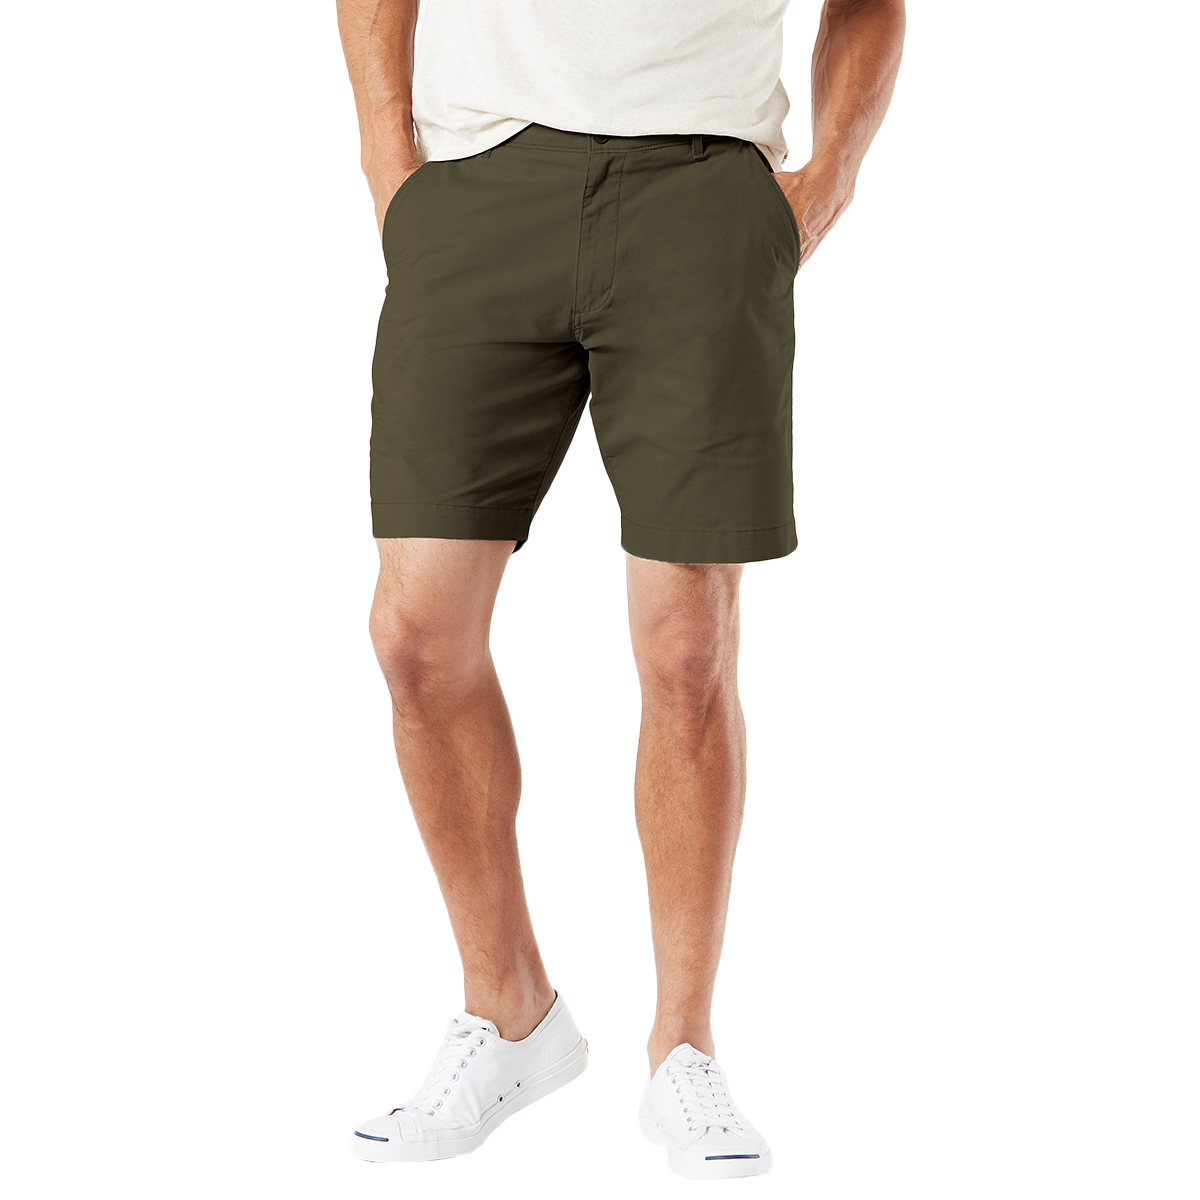 Dockers Men's Duraflex Lite Straight-Fit Shorts - Green, 34